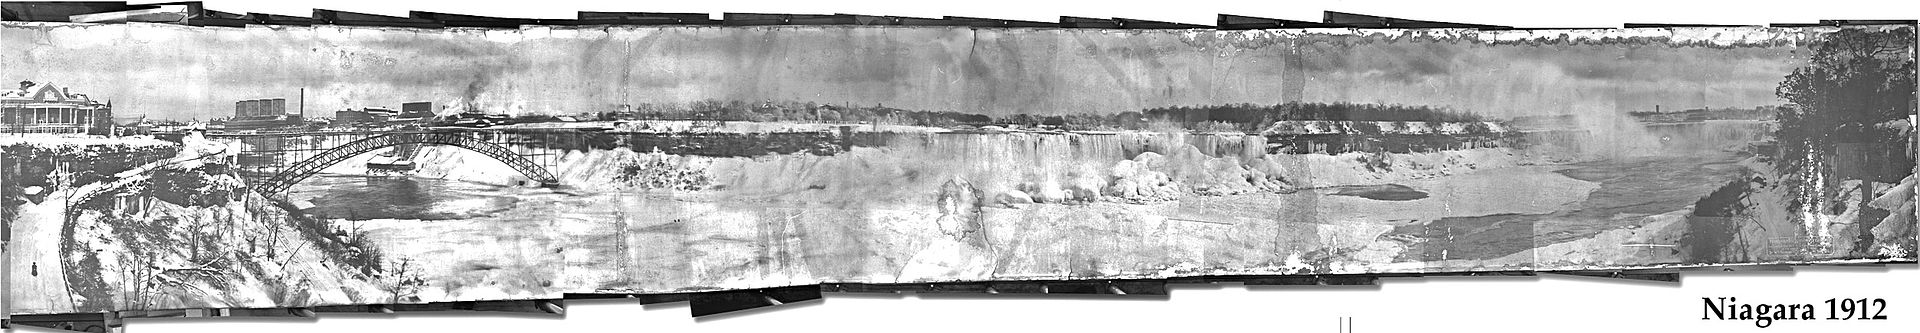 Niagara1912giantpanorama.jpg